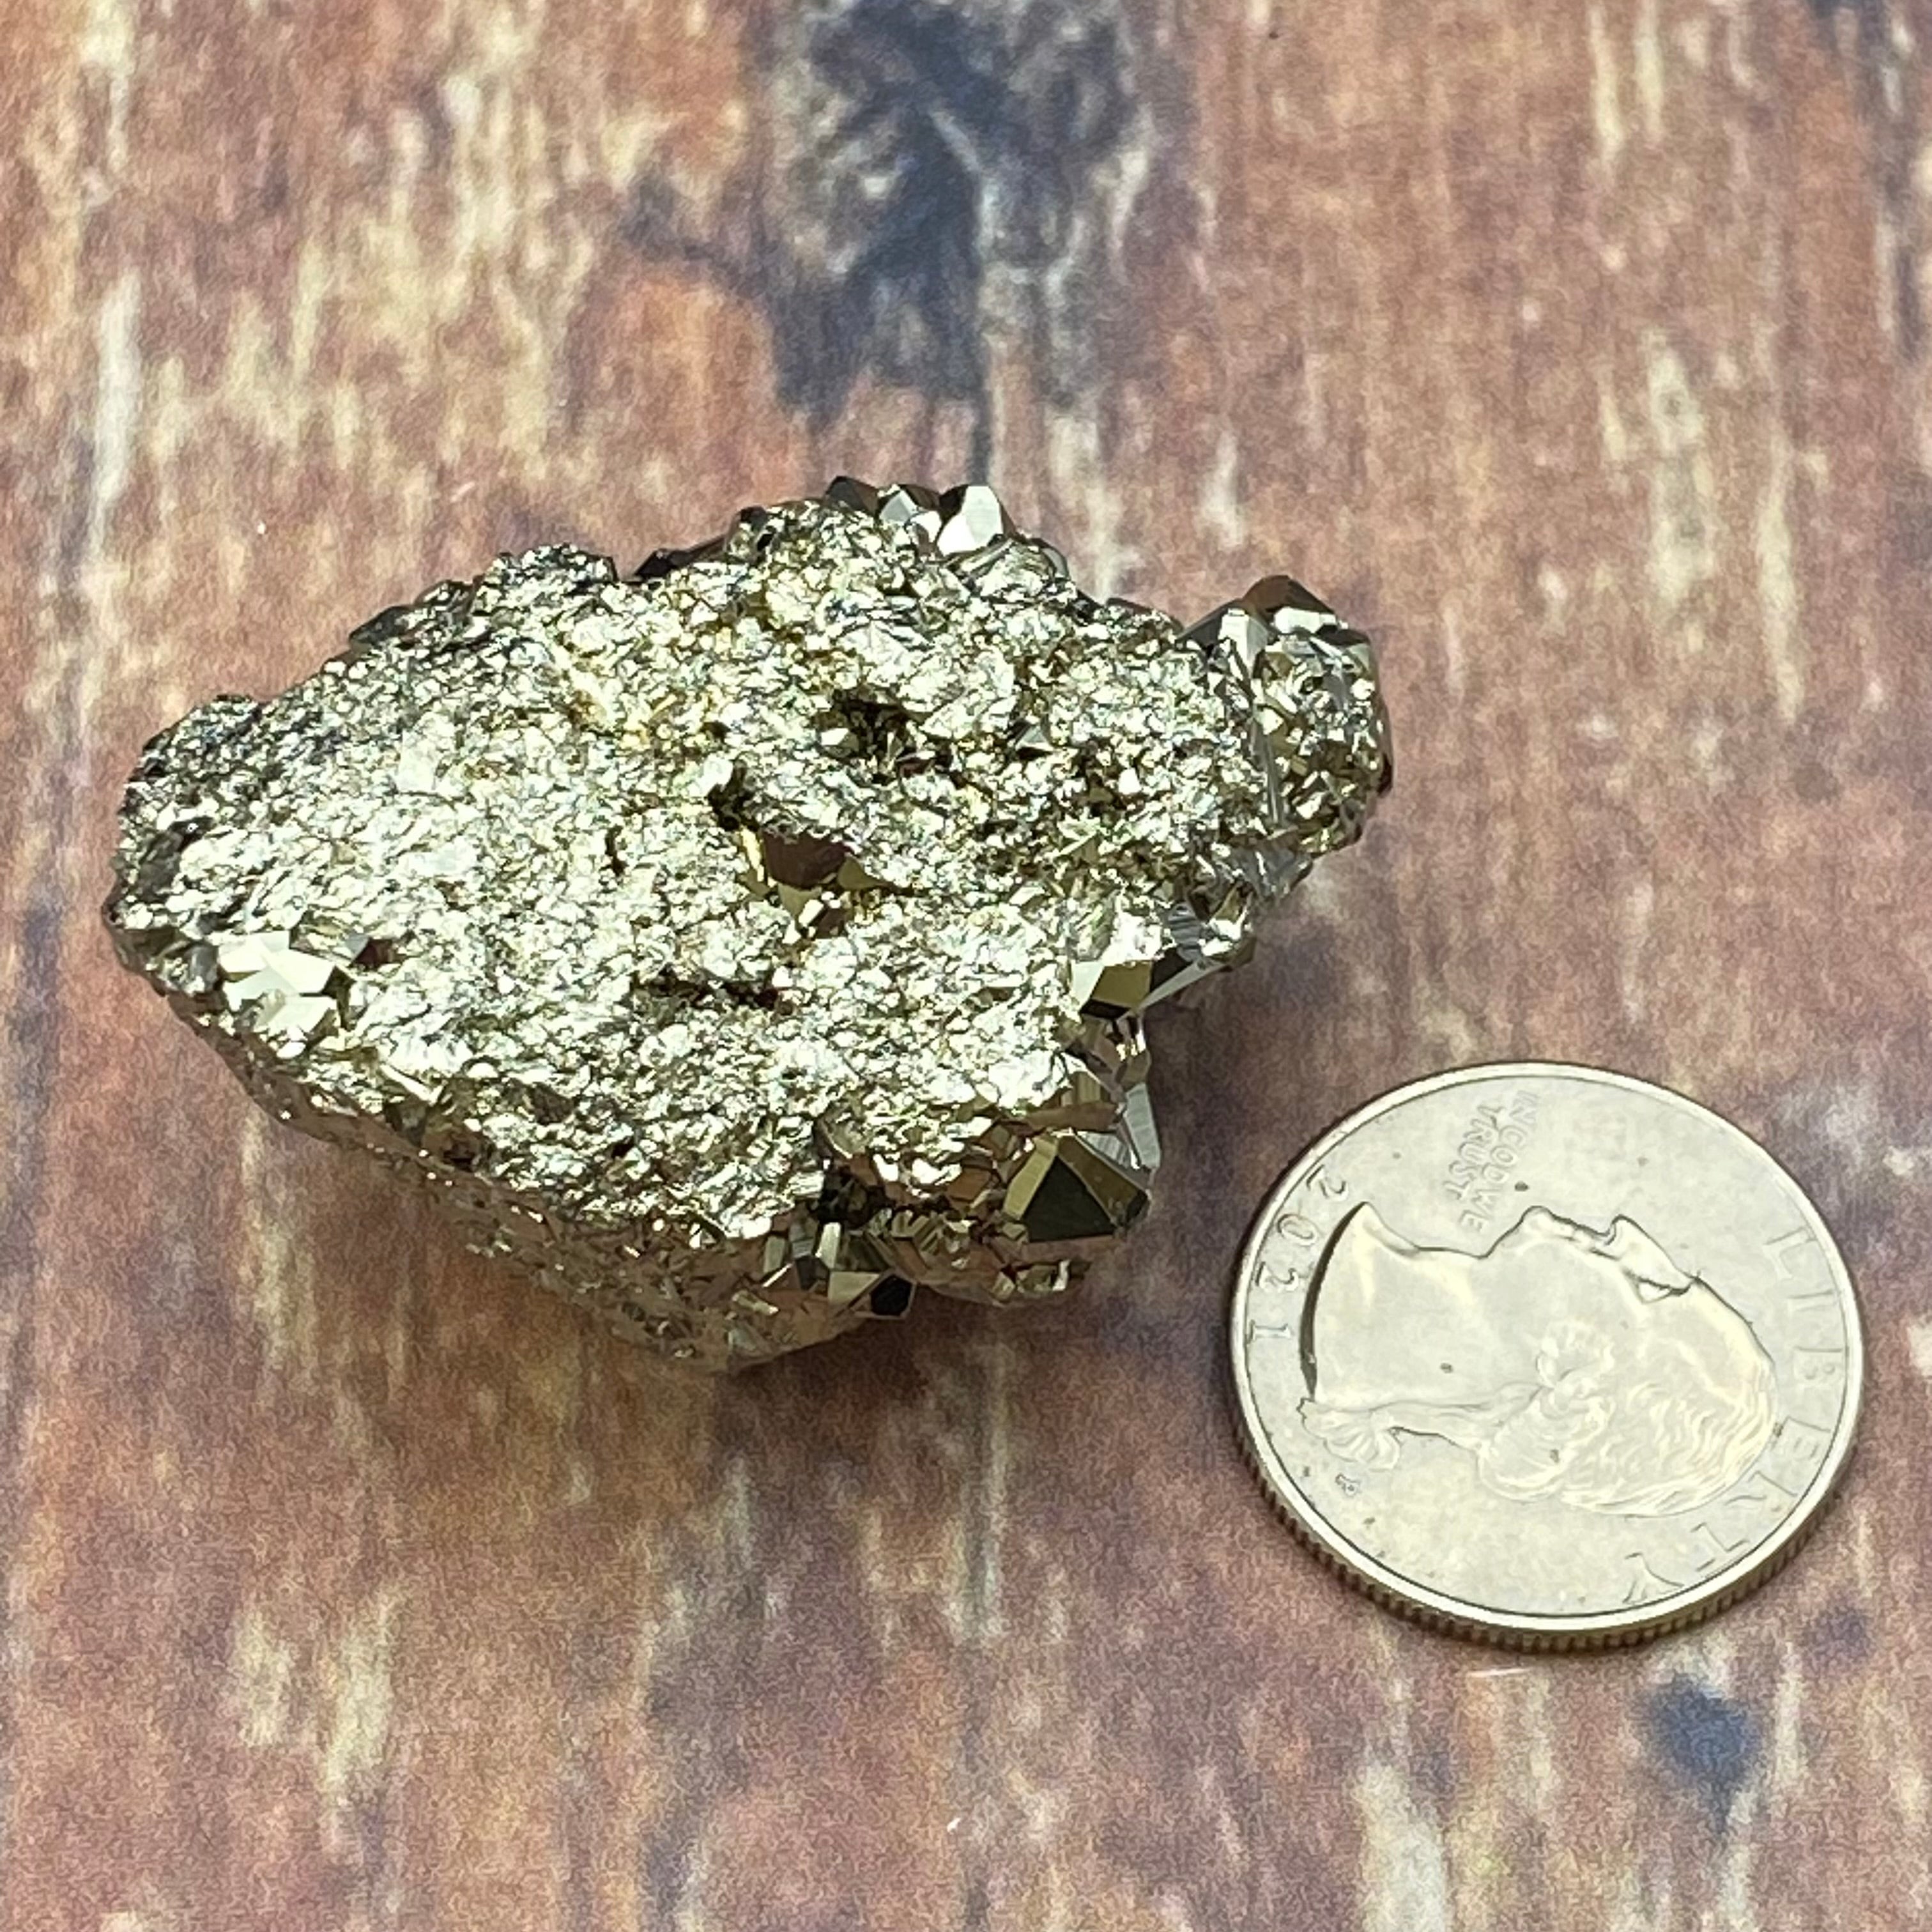 Peruvian Pyrite Crystal - 013